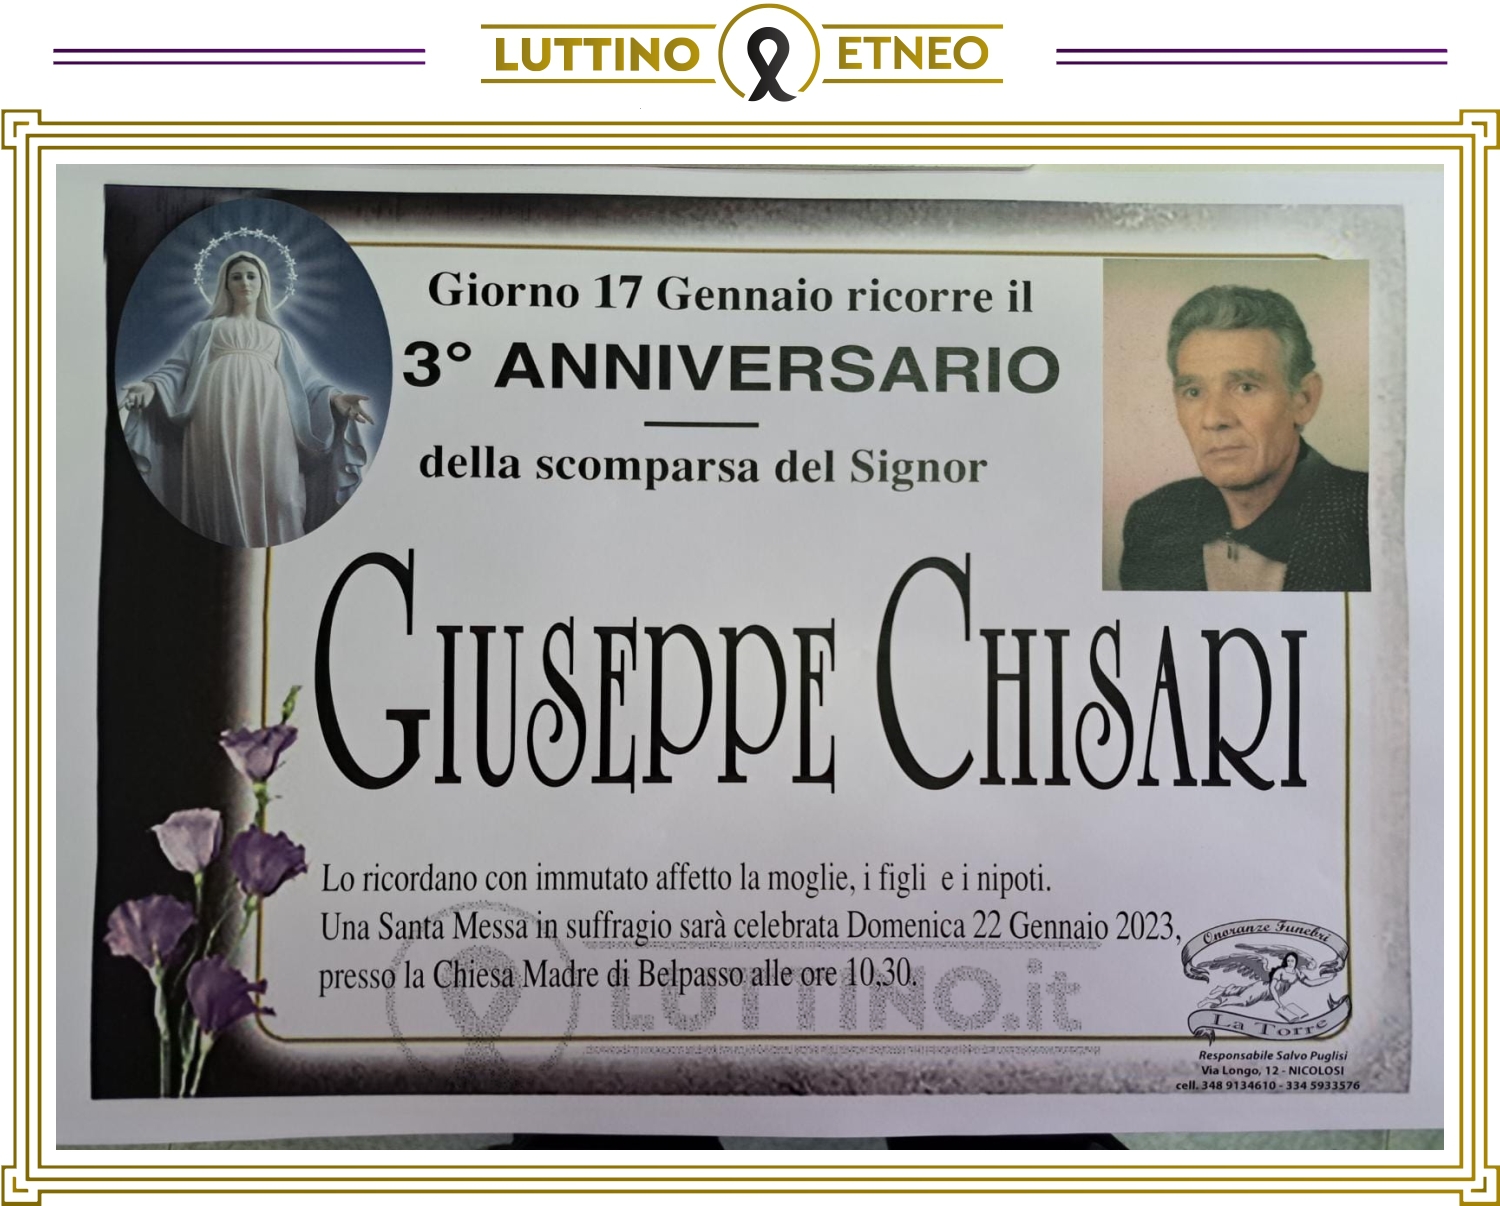 Giuseppe  Chisari 